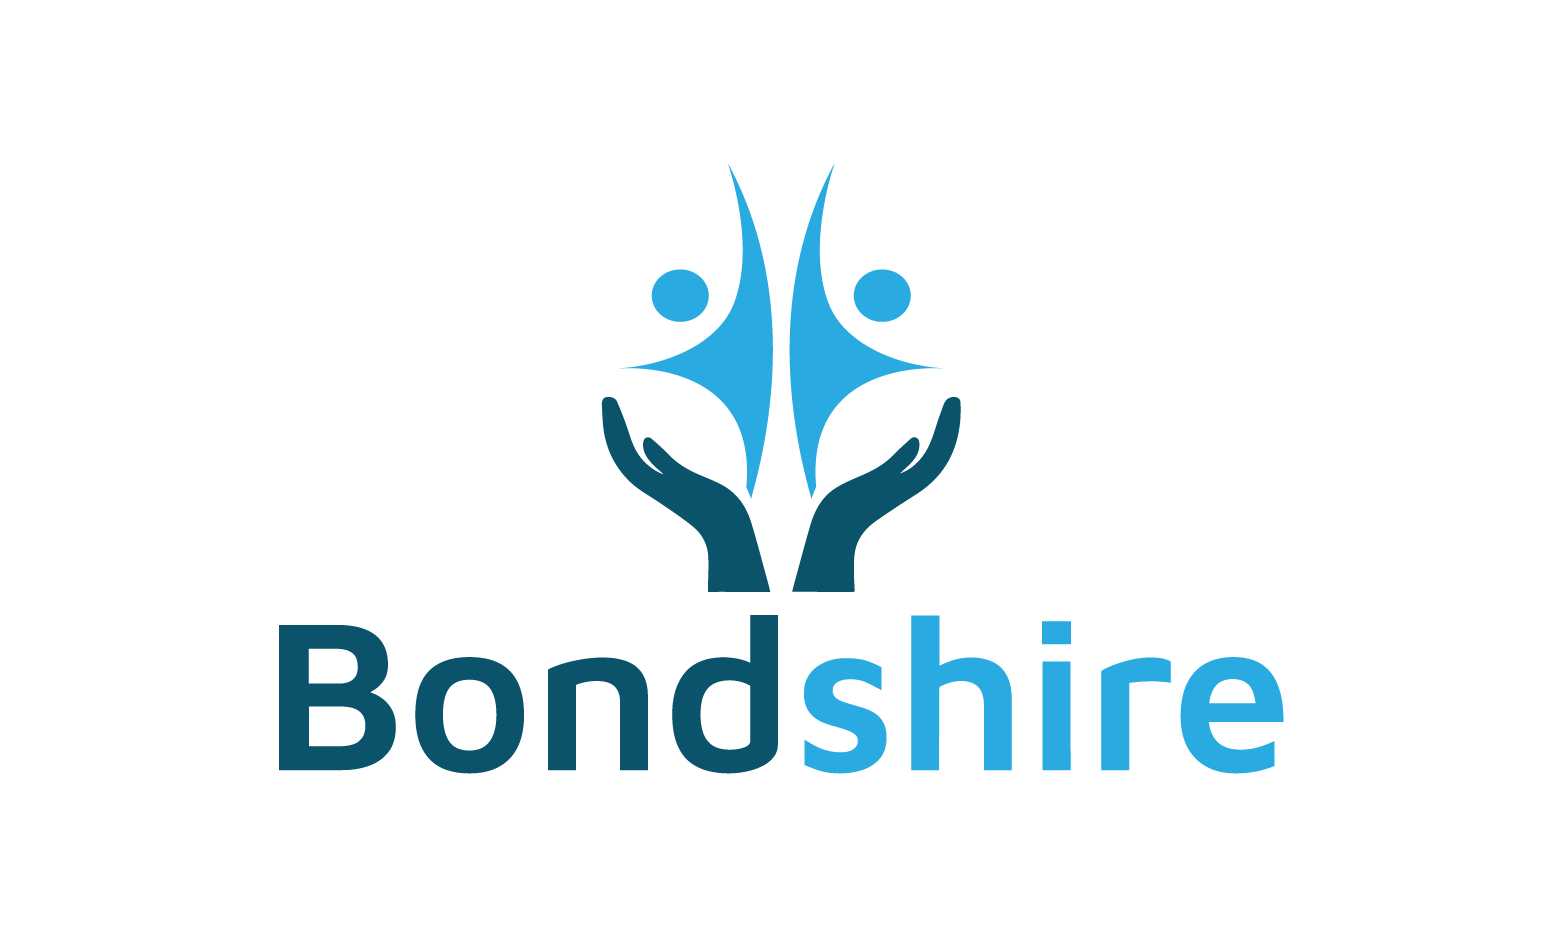 Bondshire.com - Creative brandable domain for sale